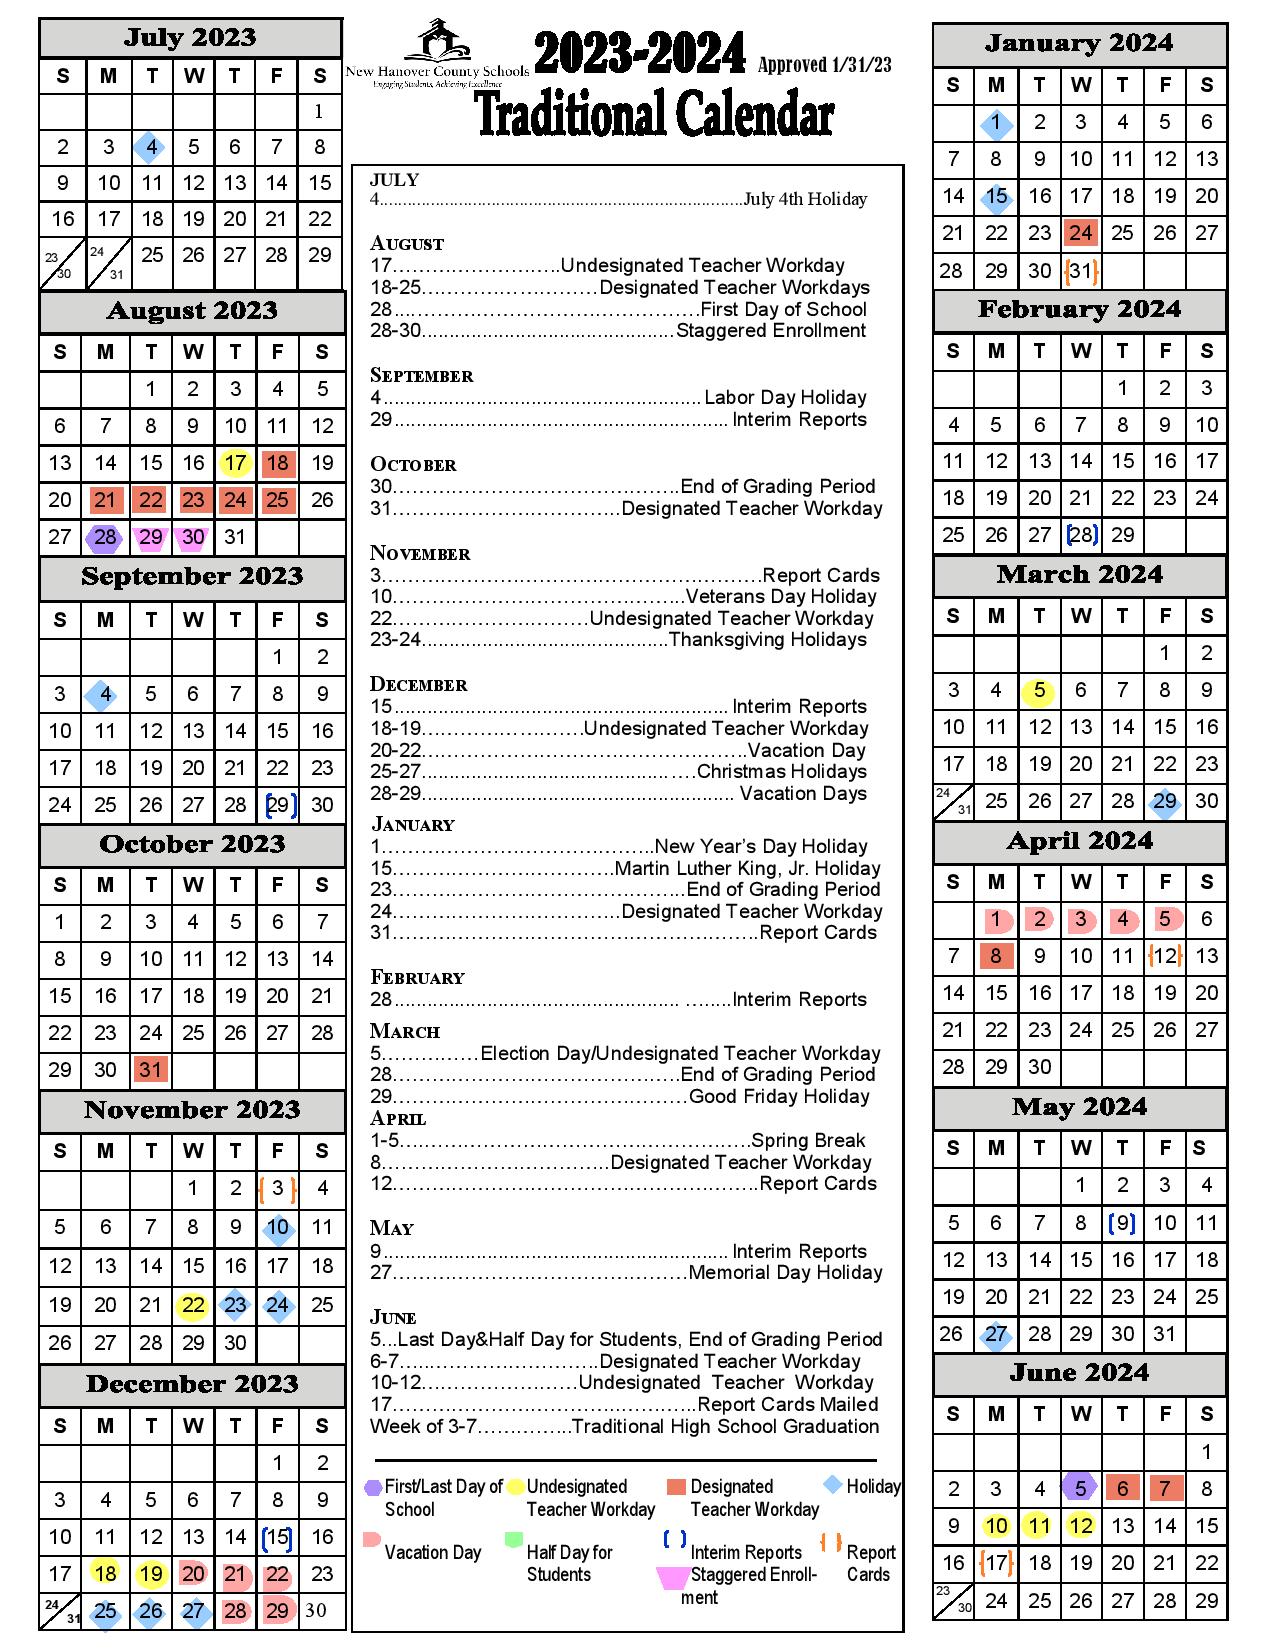 New Hanover County Schools Calendar 20232024 in PDF